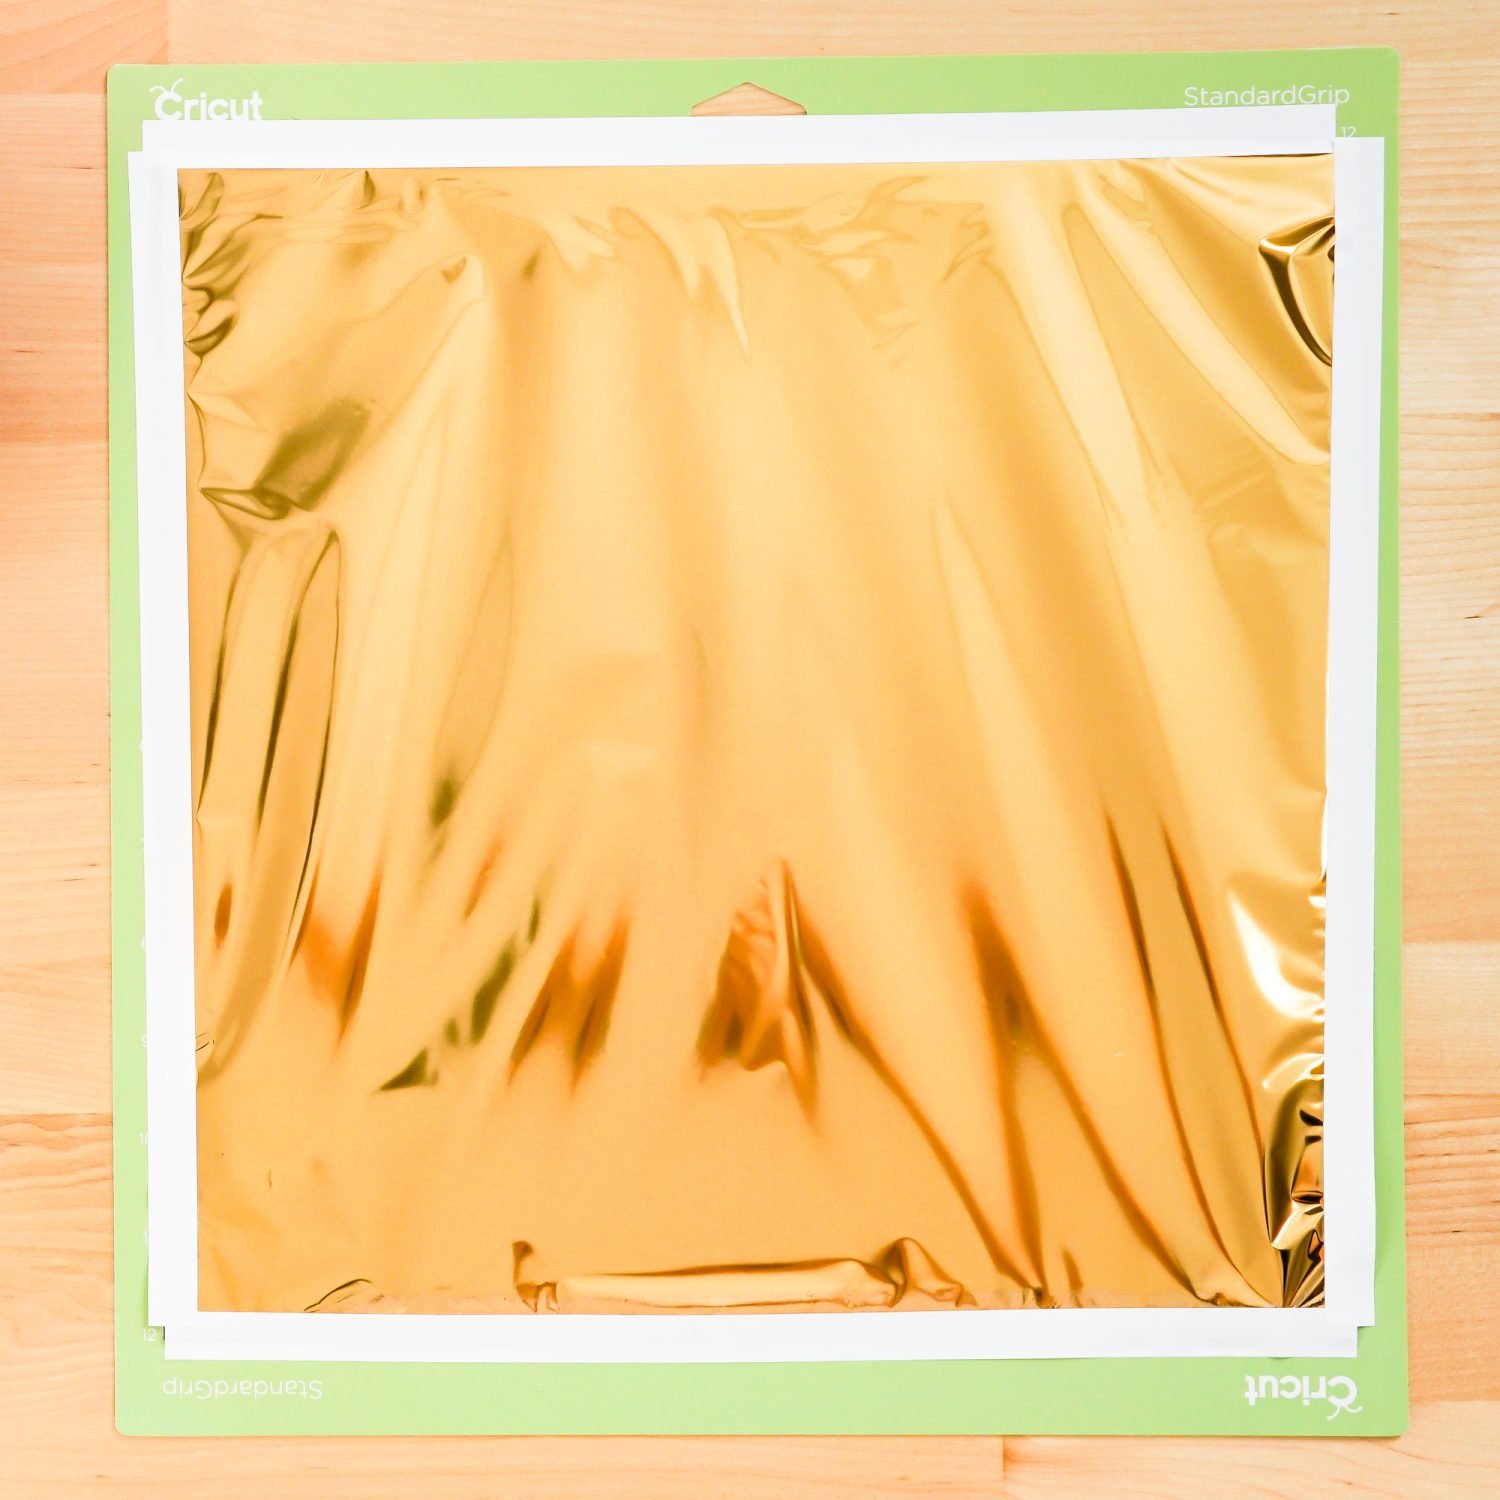 A piece of Cricut foil in gold taped to a green Cricut mat